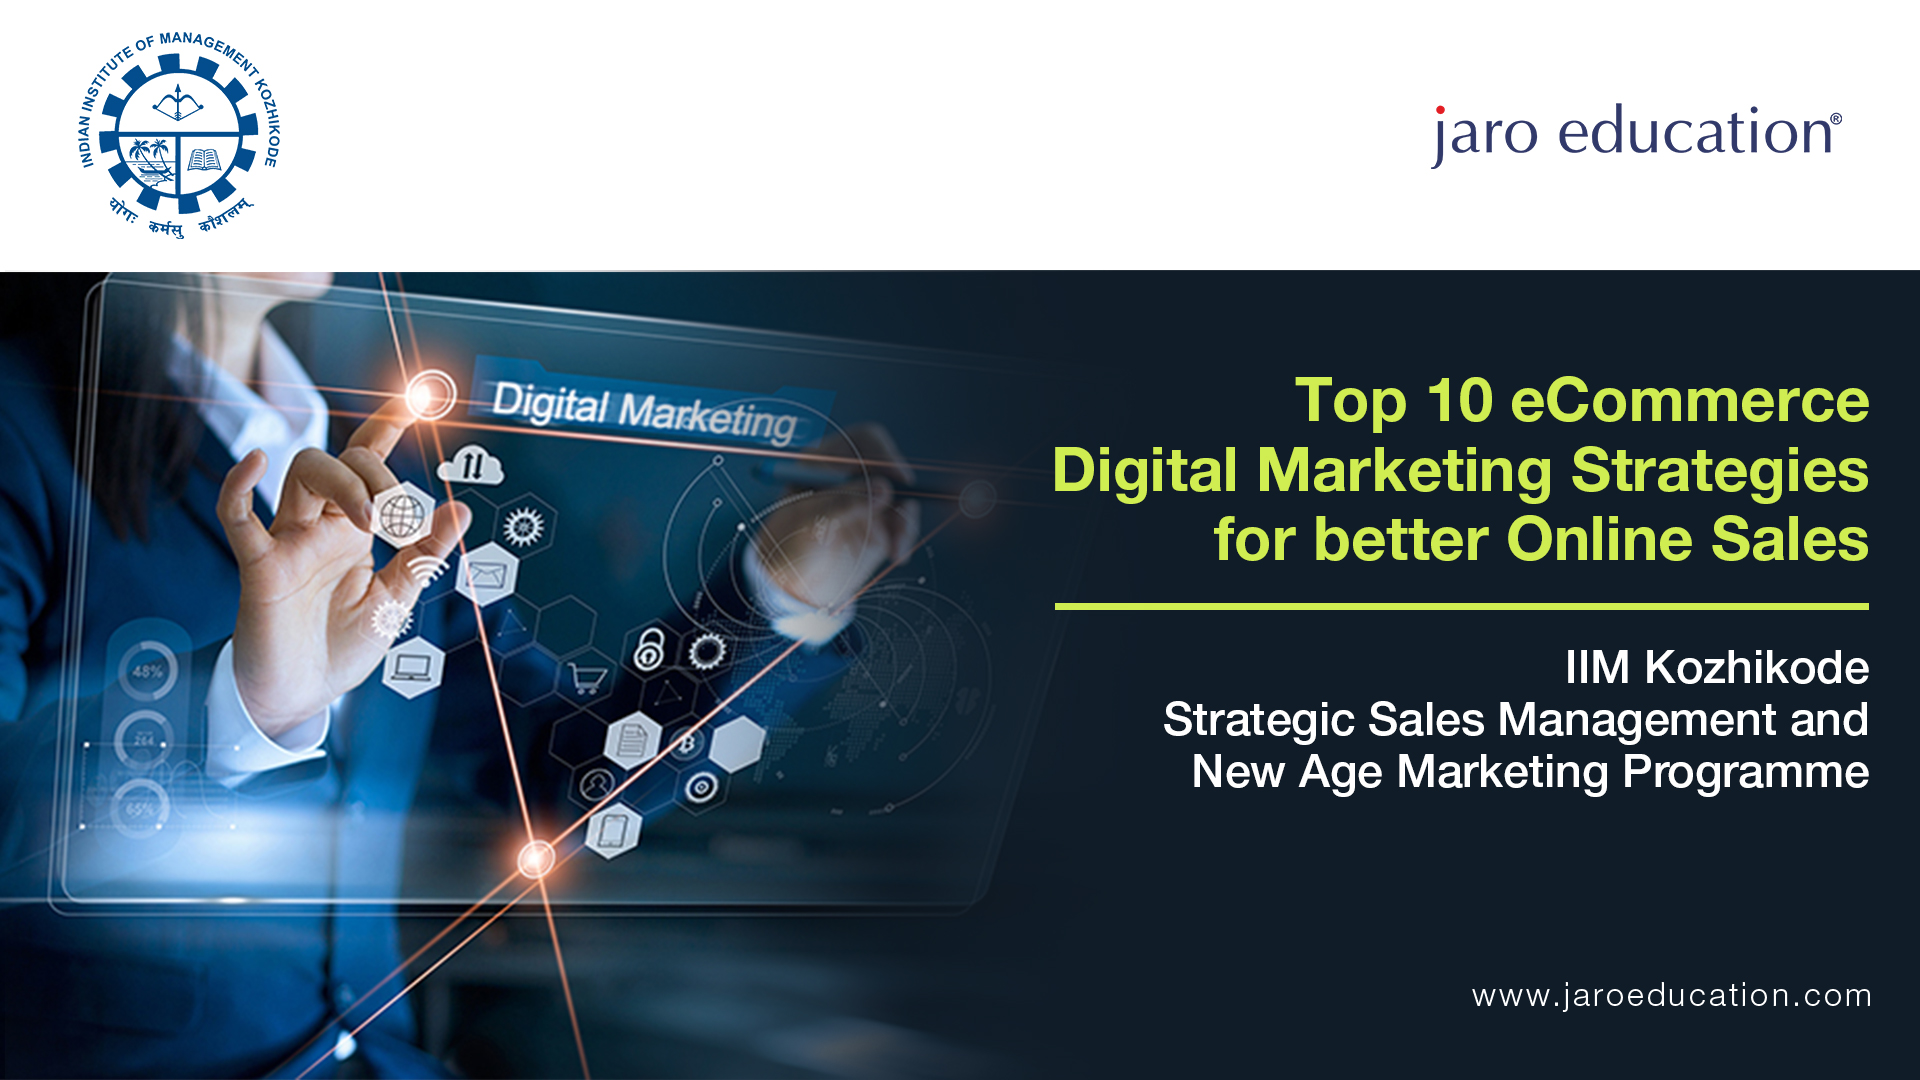 Digital-Marketing-Strategies-for-Better-Online-Sales-Jaro